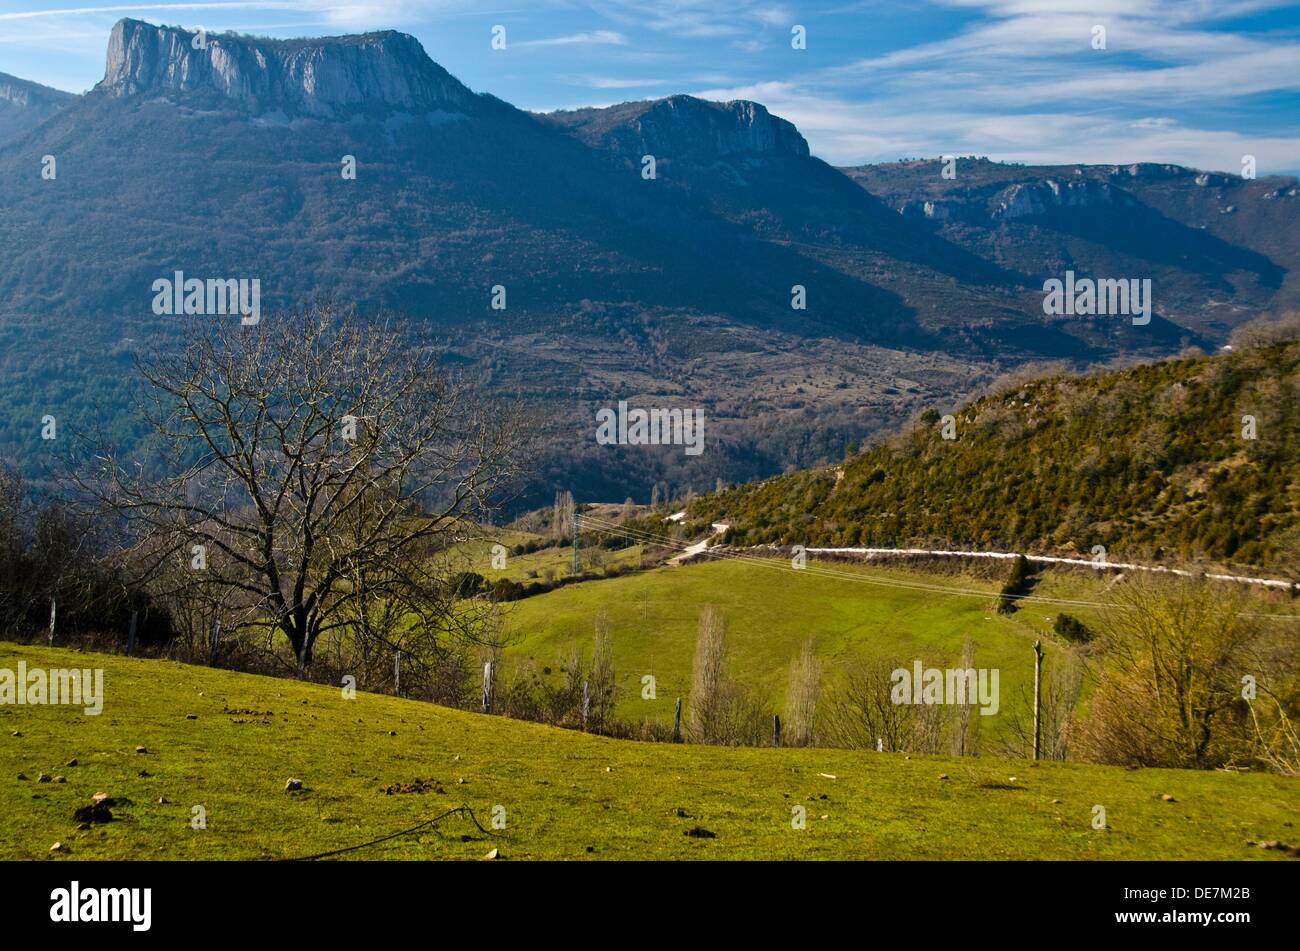 Imizcoz village, Valle de Arce, Navarre, Spain Stock Photo - Alamy